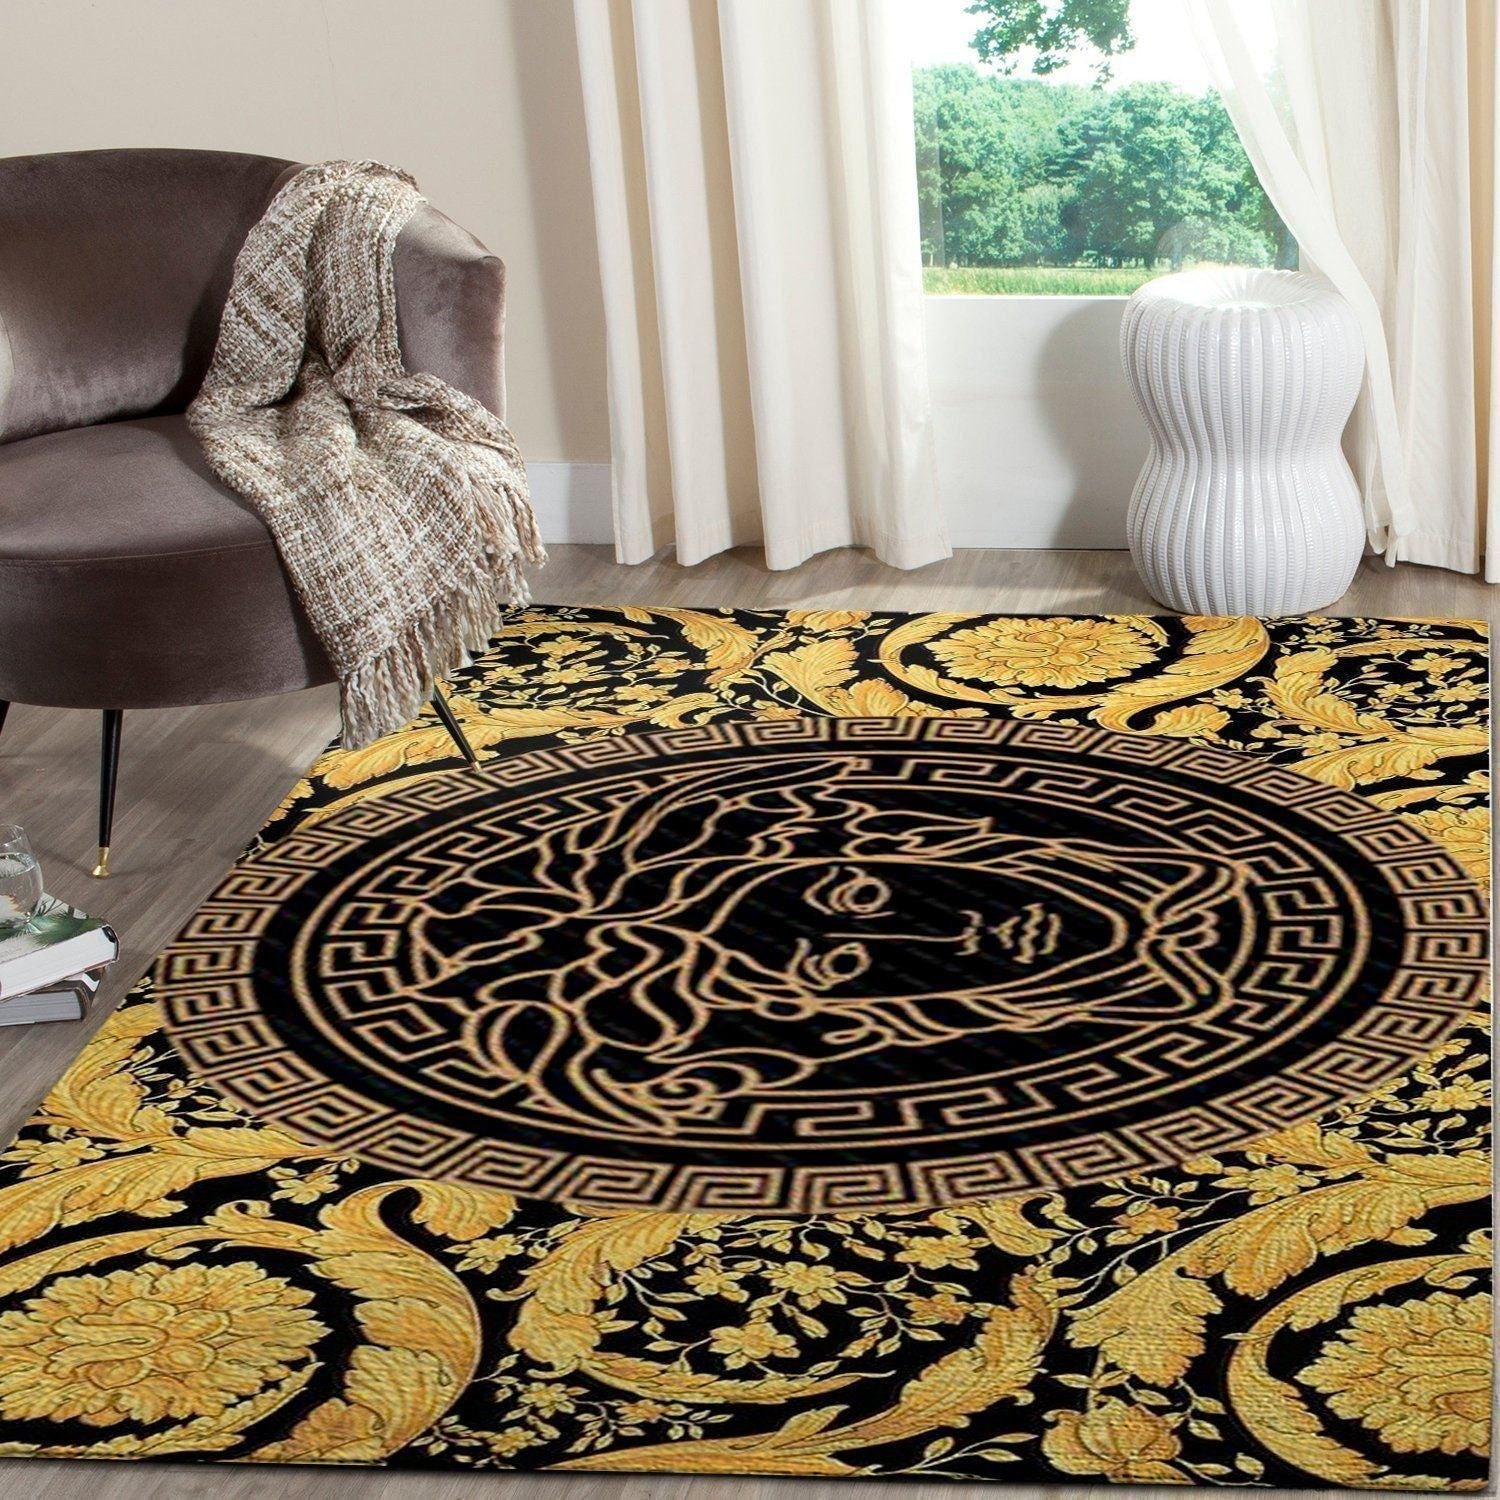 Supreme Area Rug Hypebeast Carpet Luxurious Fashion Brand Logo